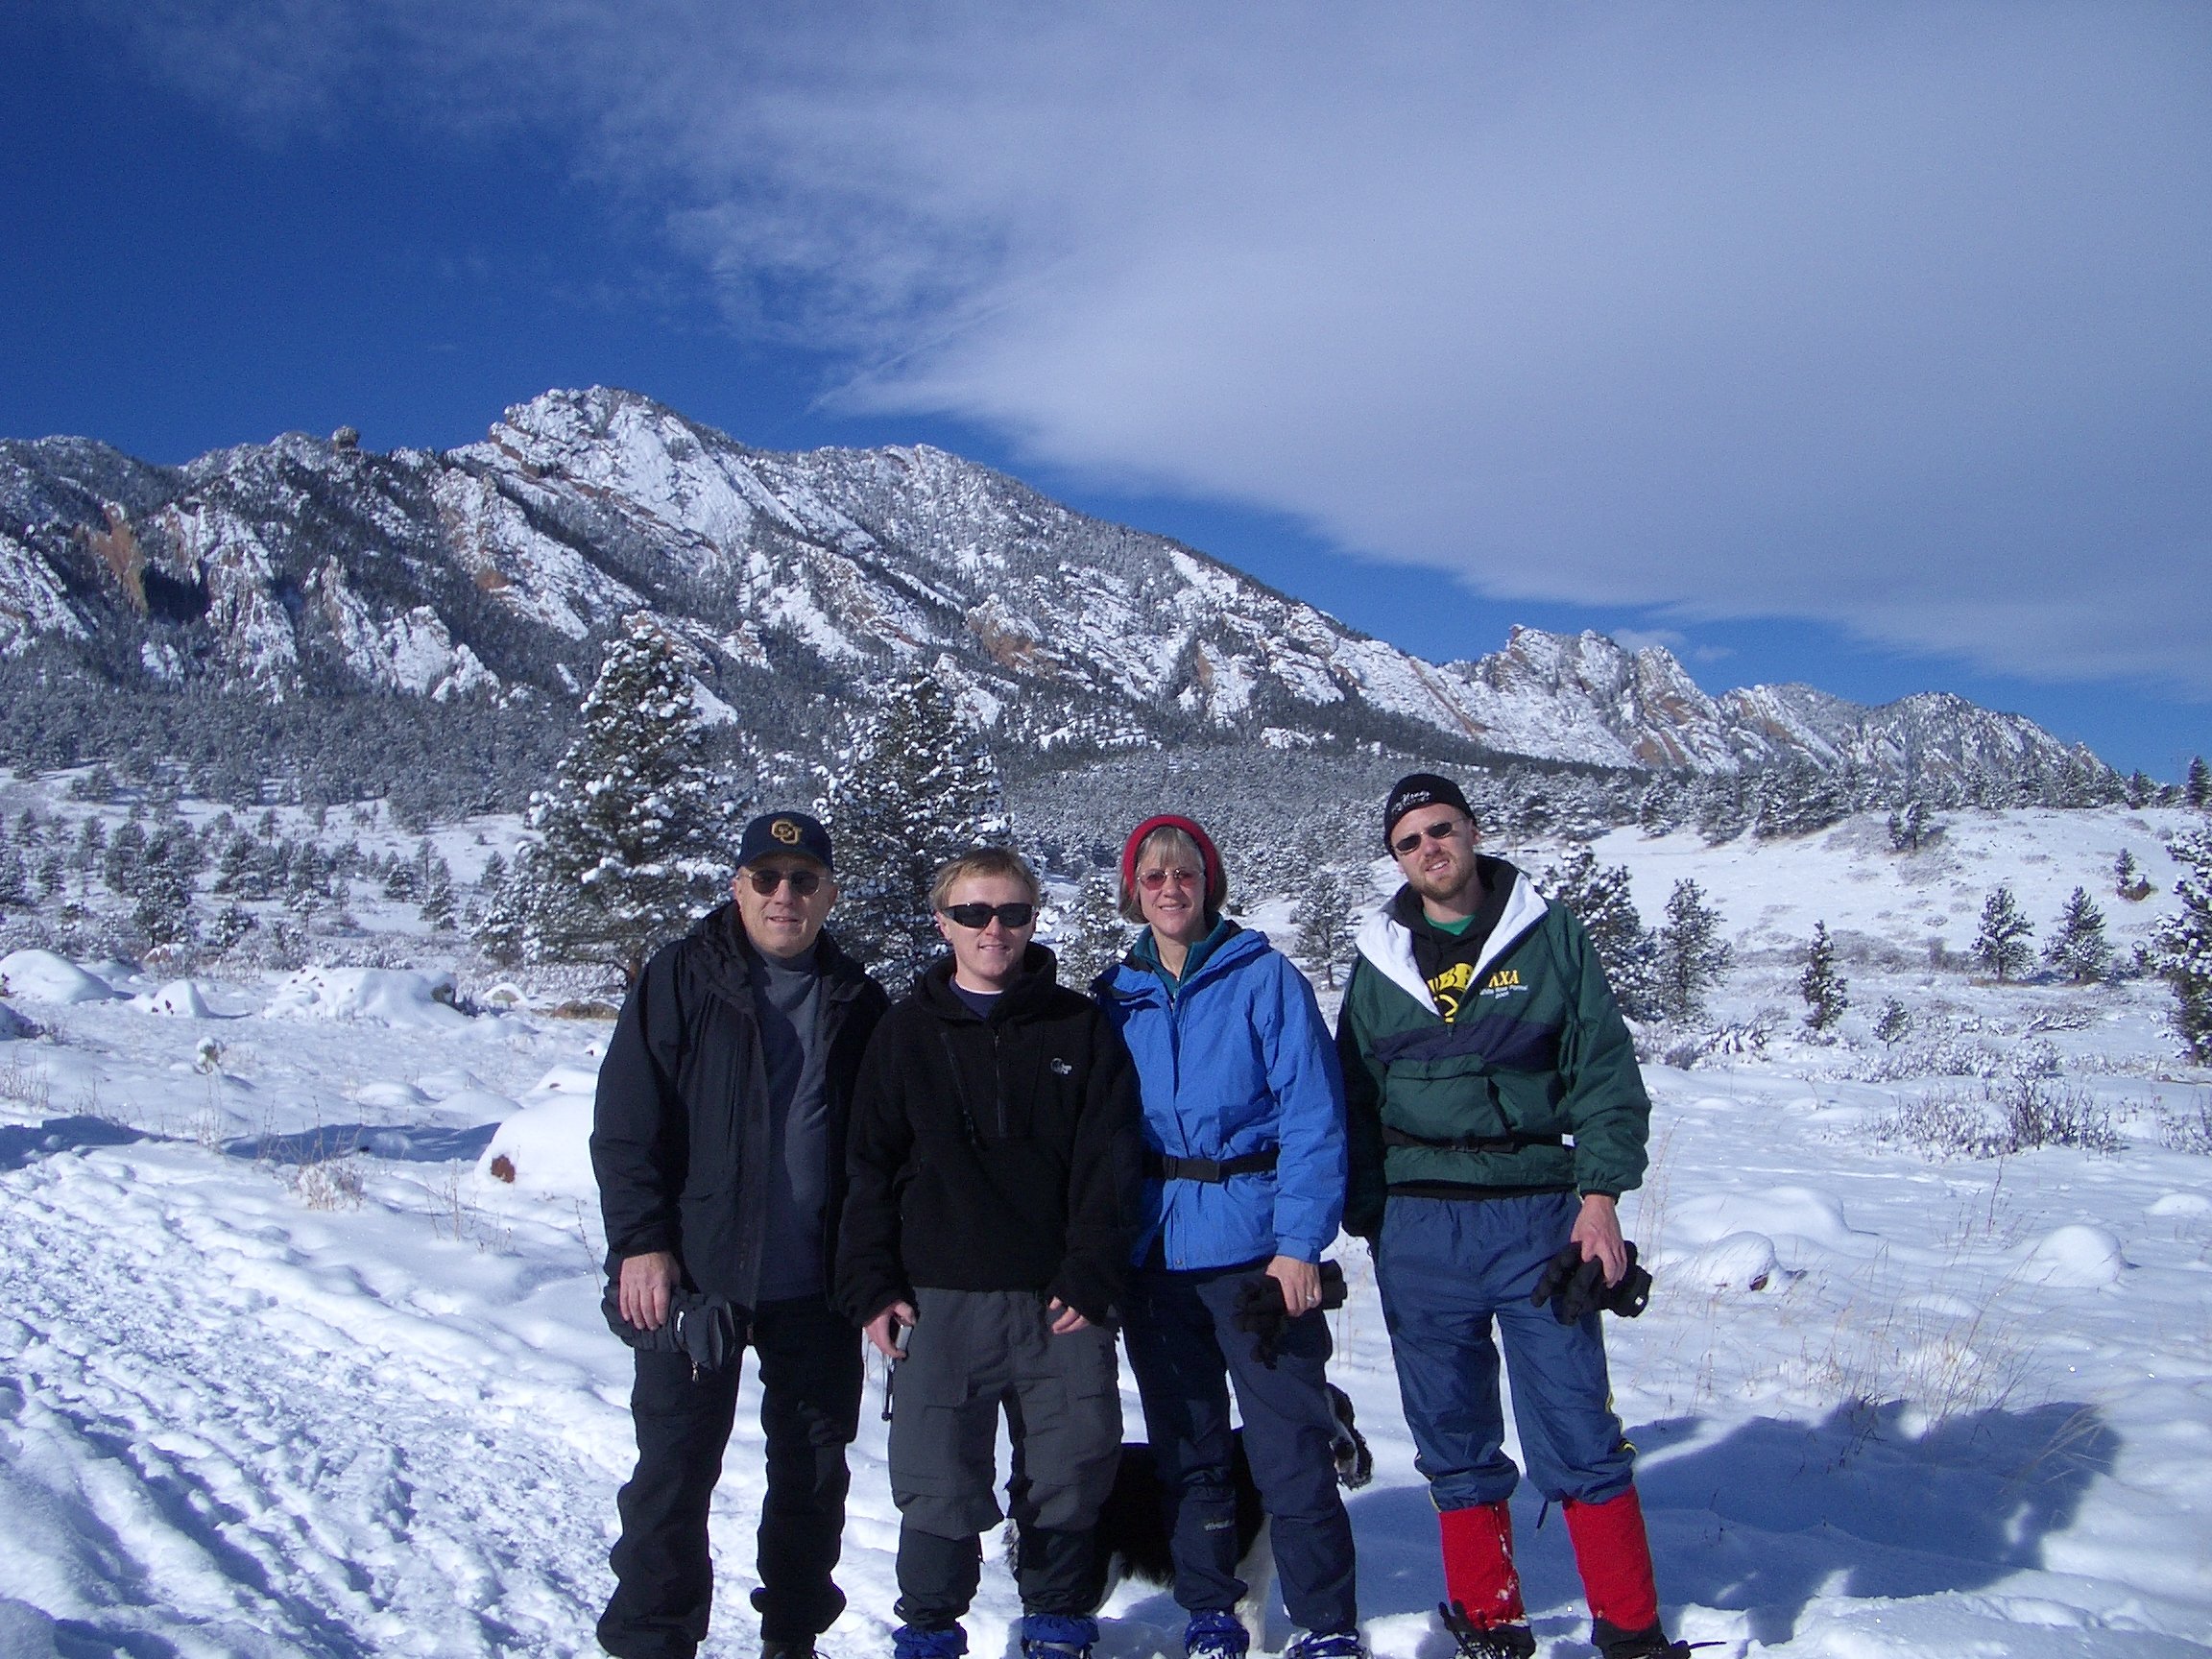 Snowshoeing near Boulder with Ian & Neil, December 2007